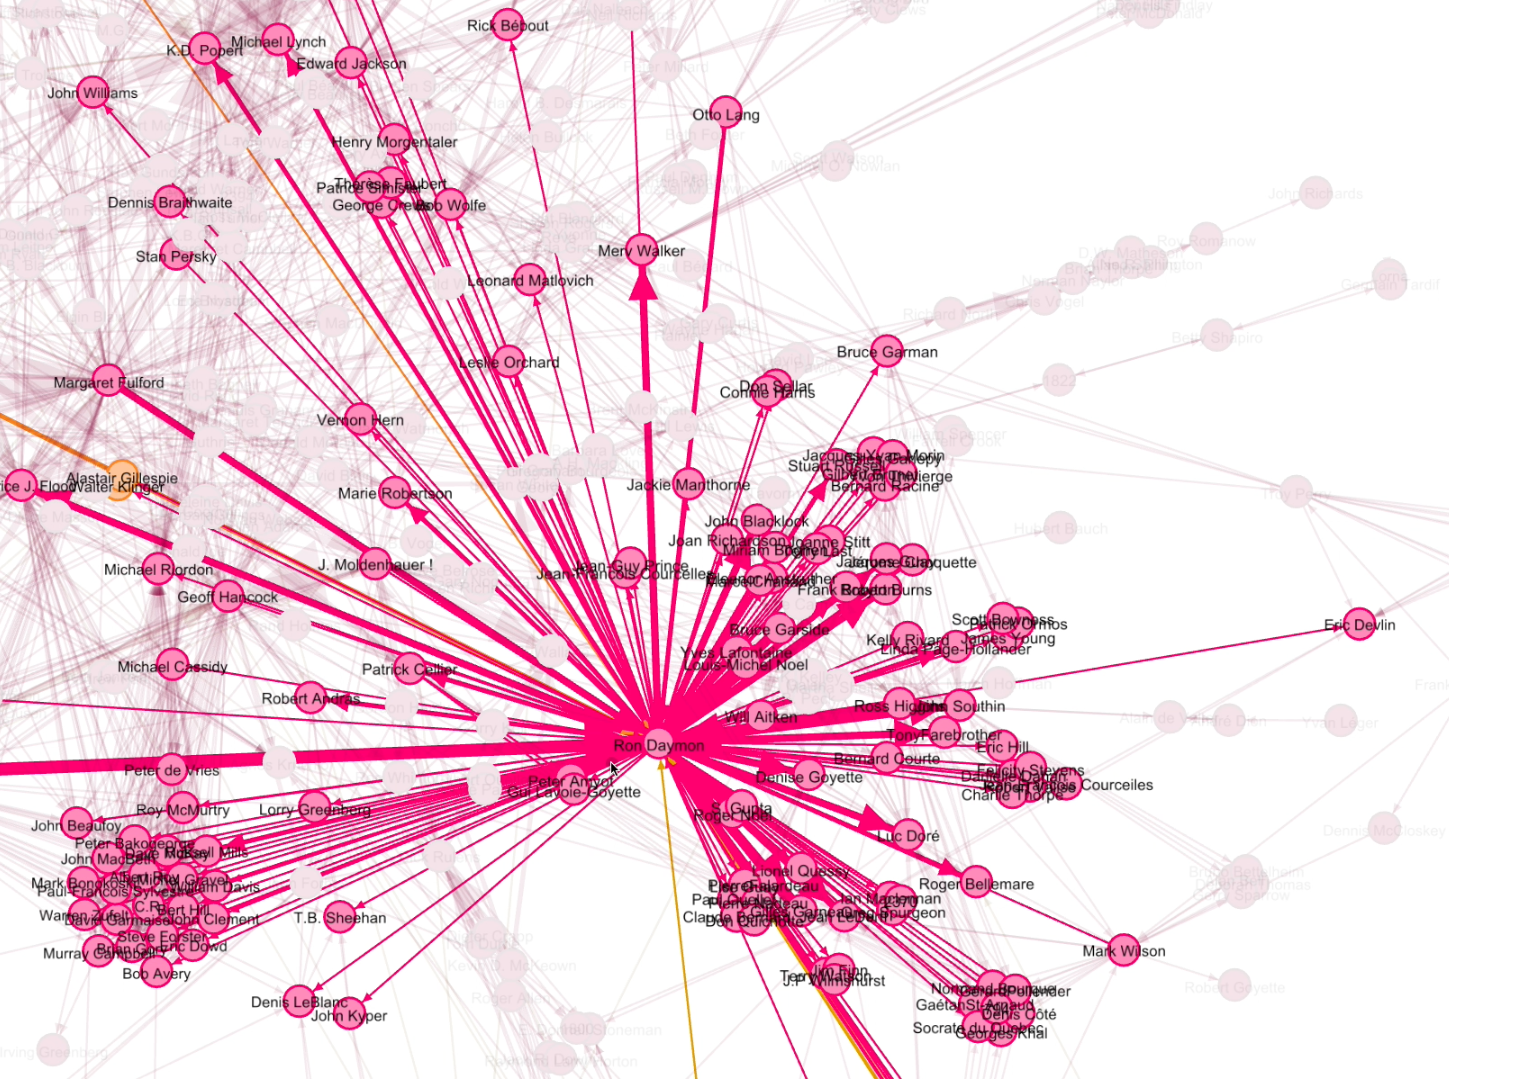 Ron Dayman Network Graph (Source: LGLC project).